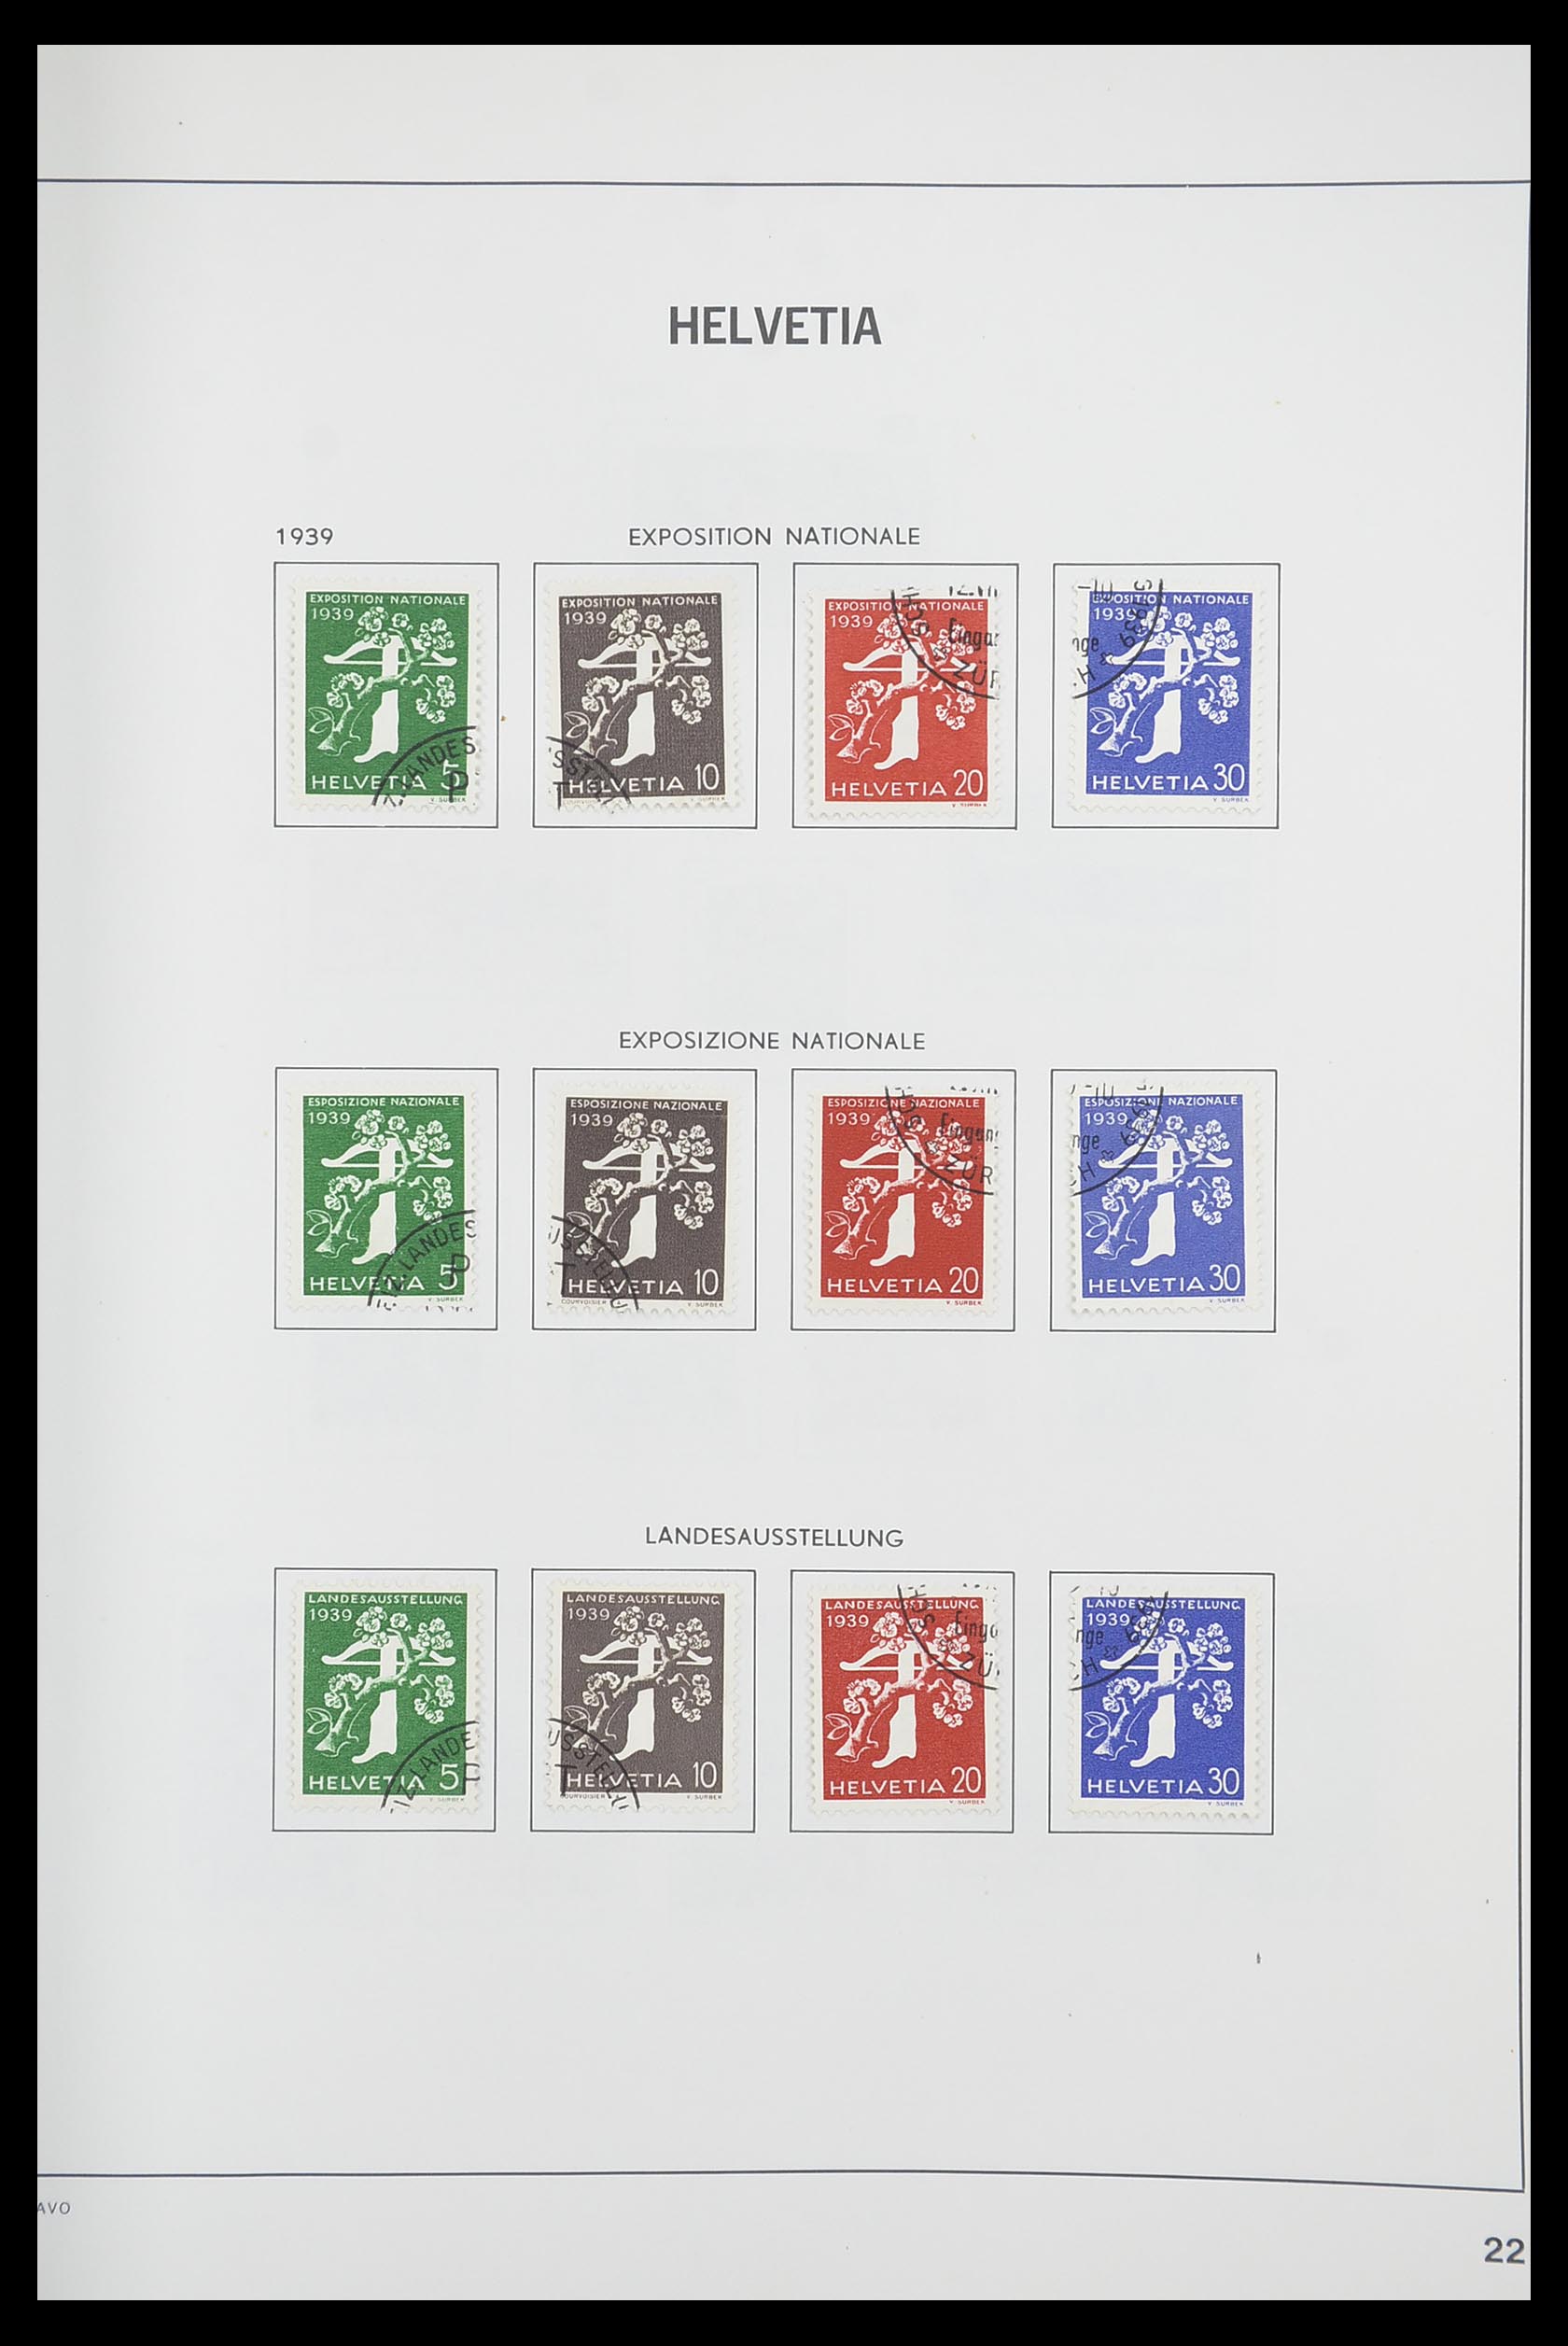 33925 020 - Stamp collection 33925 Switzerland 1854-1991.